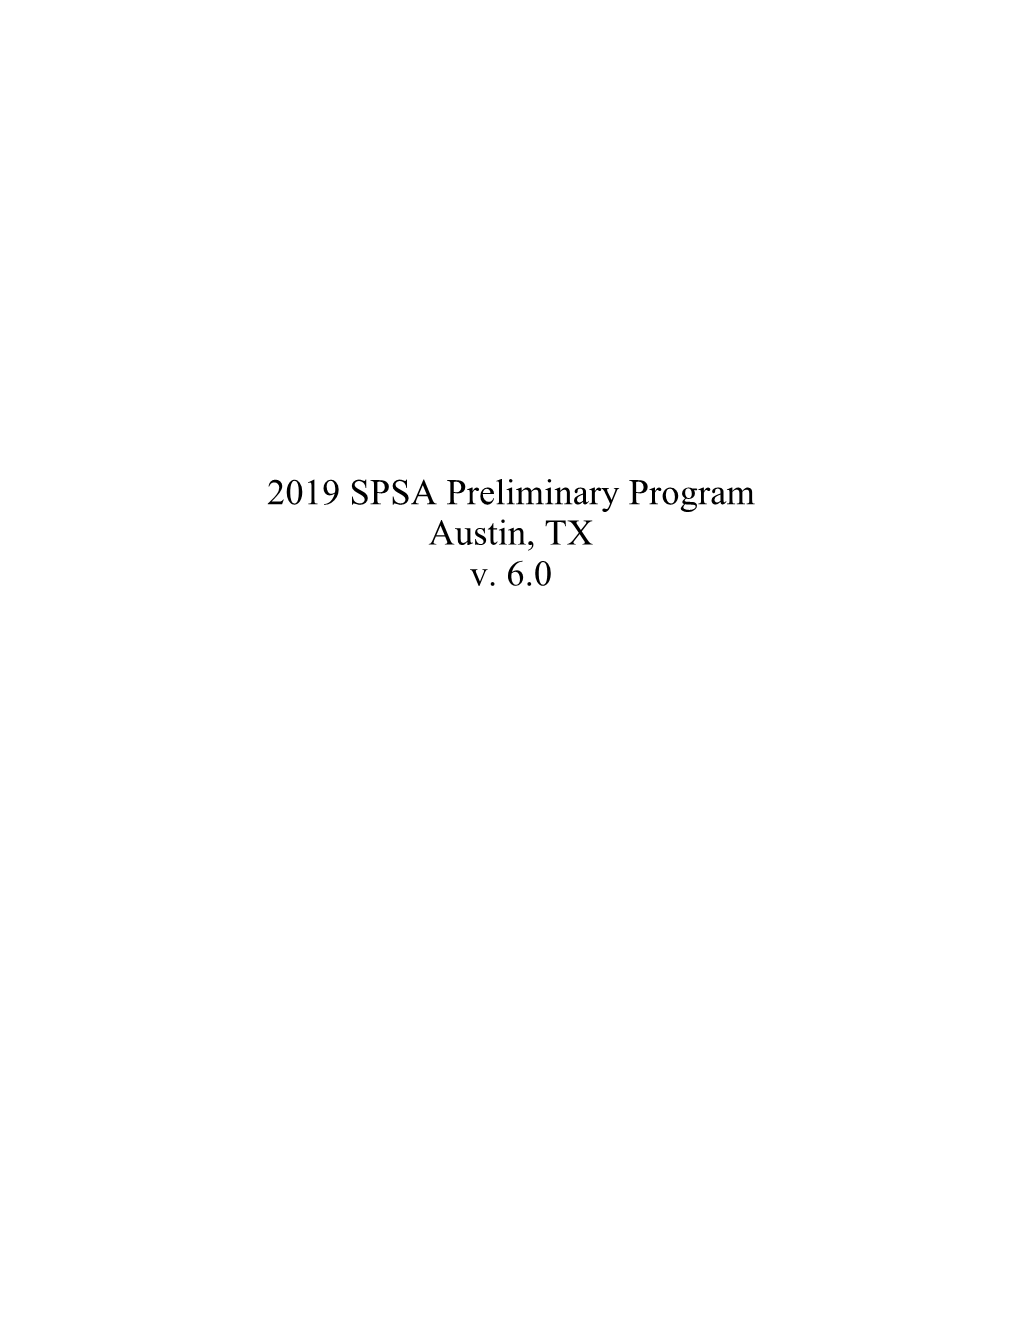 2019 SPSA Preliminary Program Austin, TX V. 6.0